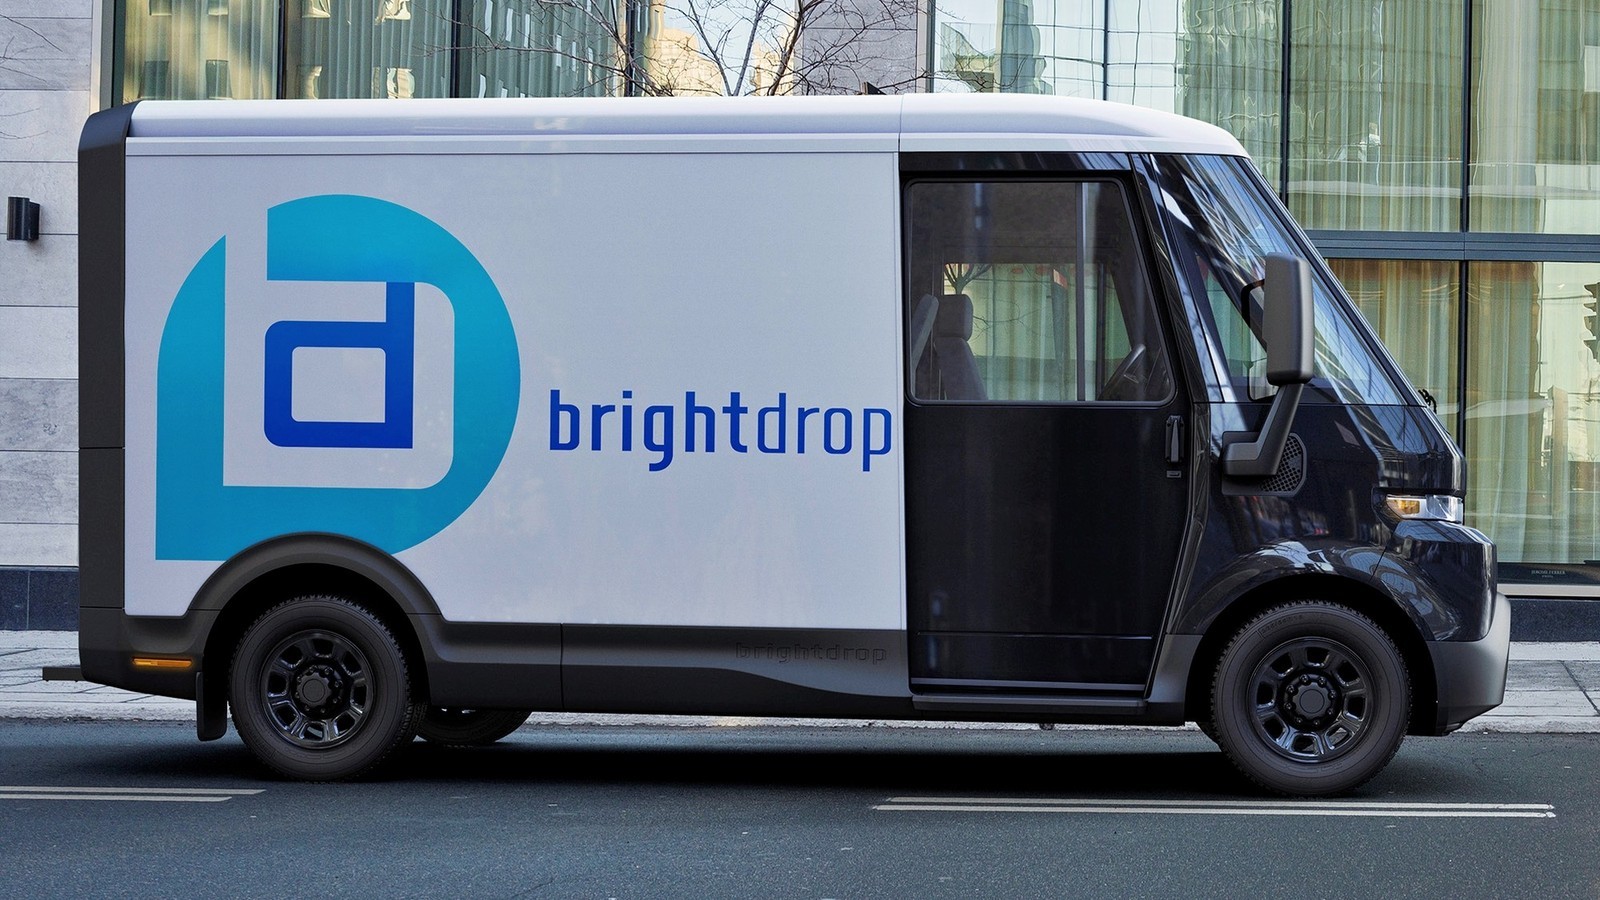 BrightDrop EV410 — младший электрический фургон от нового коммерческого бренда GM